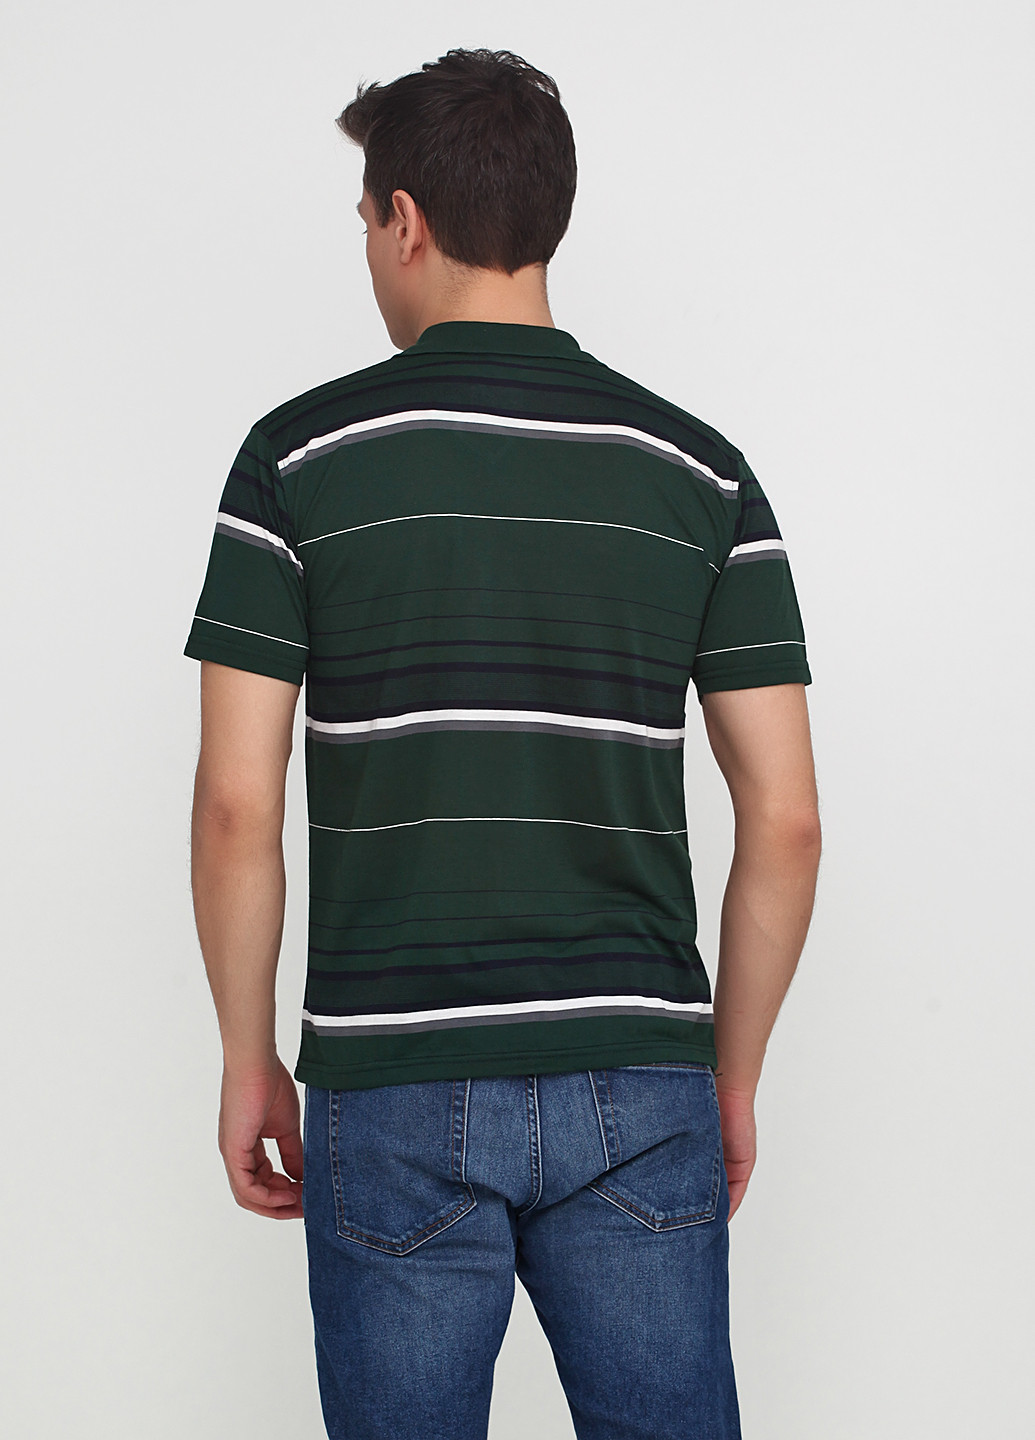 Темно-зеленая футболка-поло для мужчин Onur в полоску